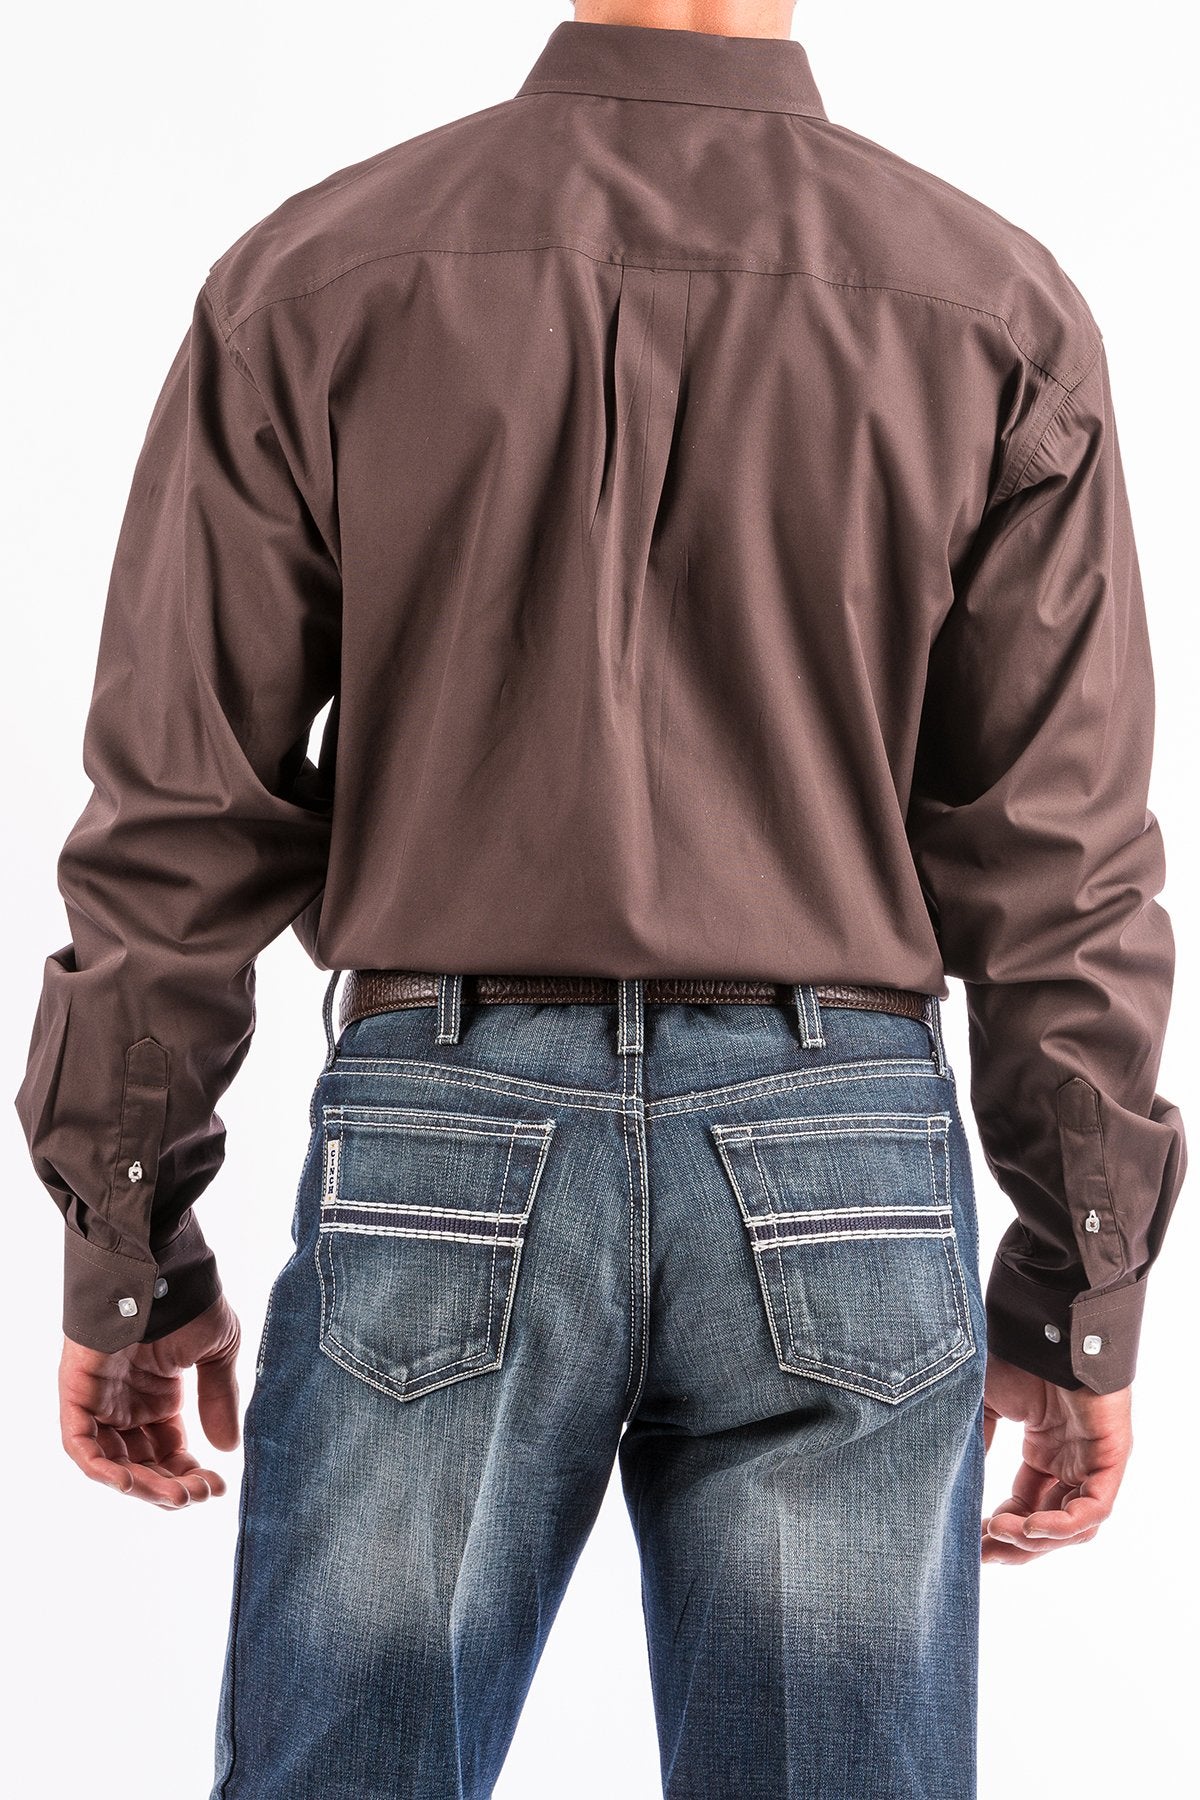 Cinch Men's Solid Long Sleeve Button-Down Western Shirt